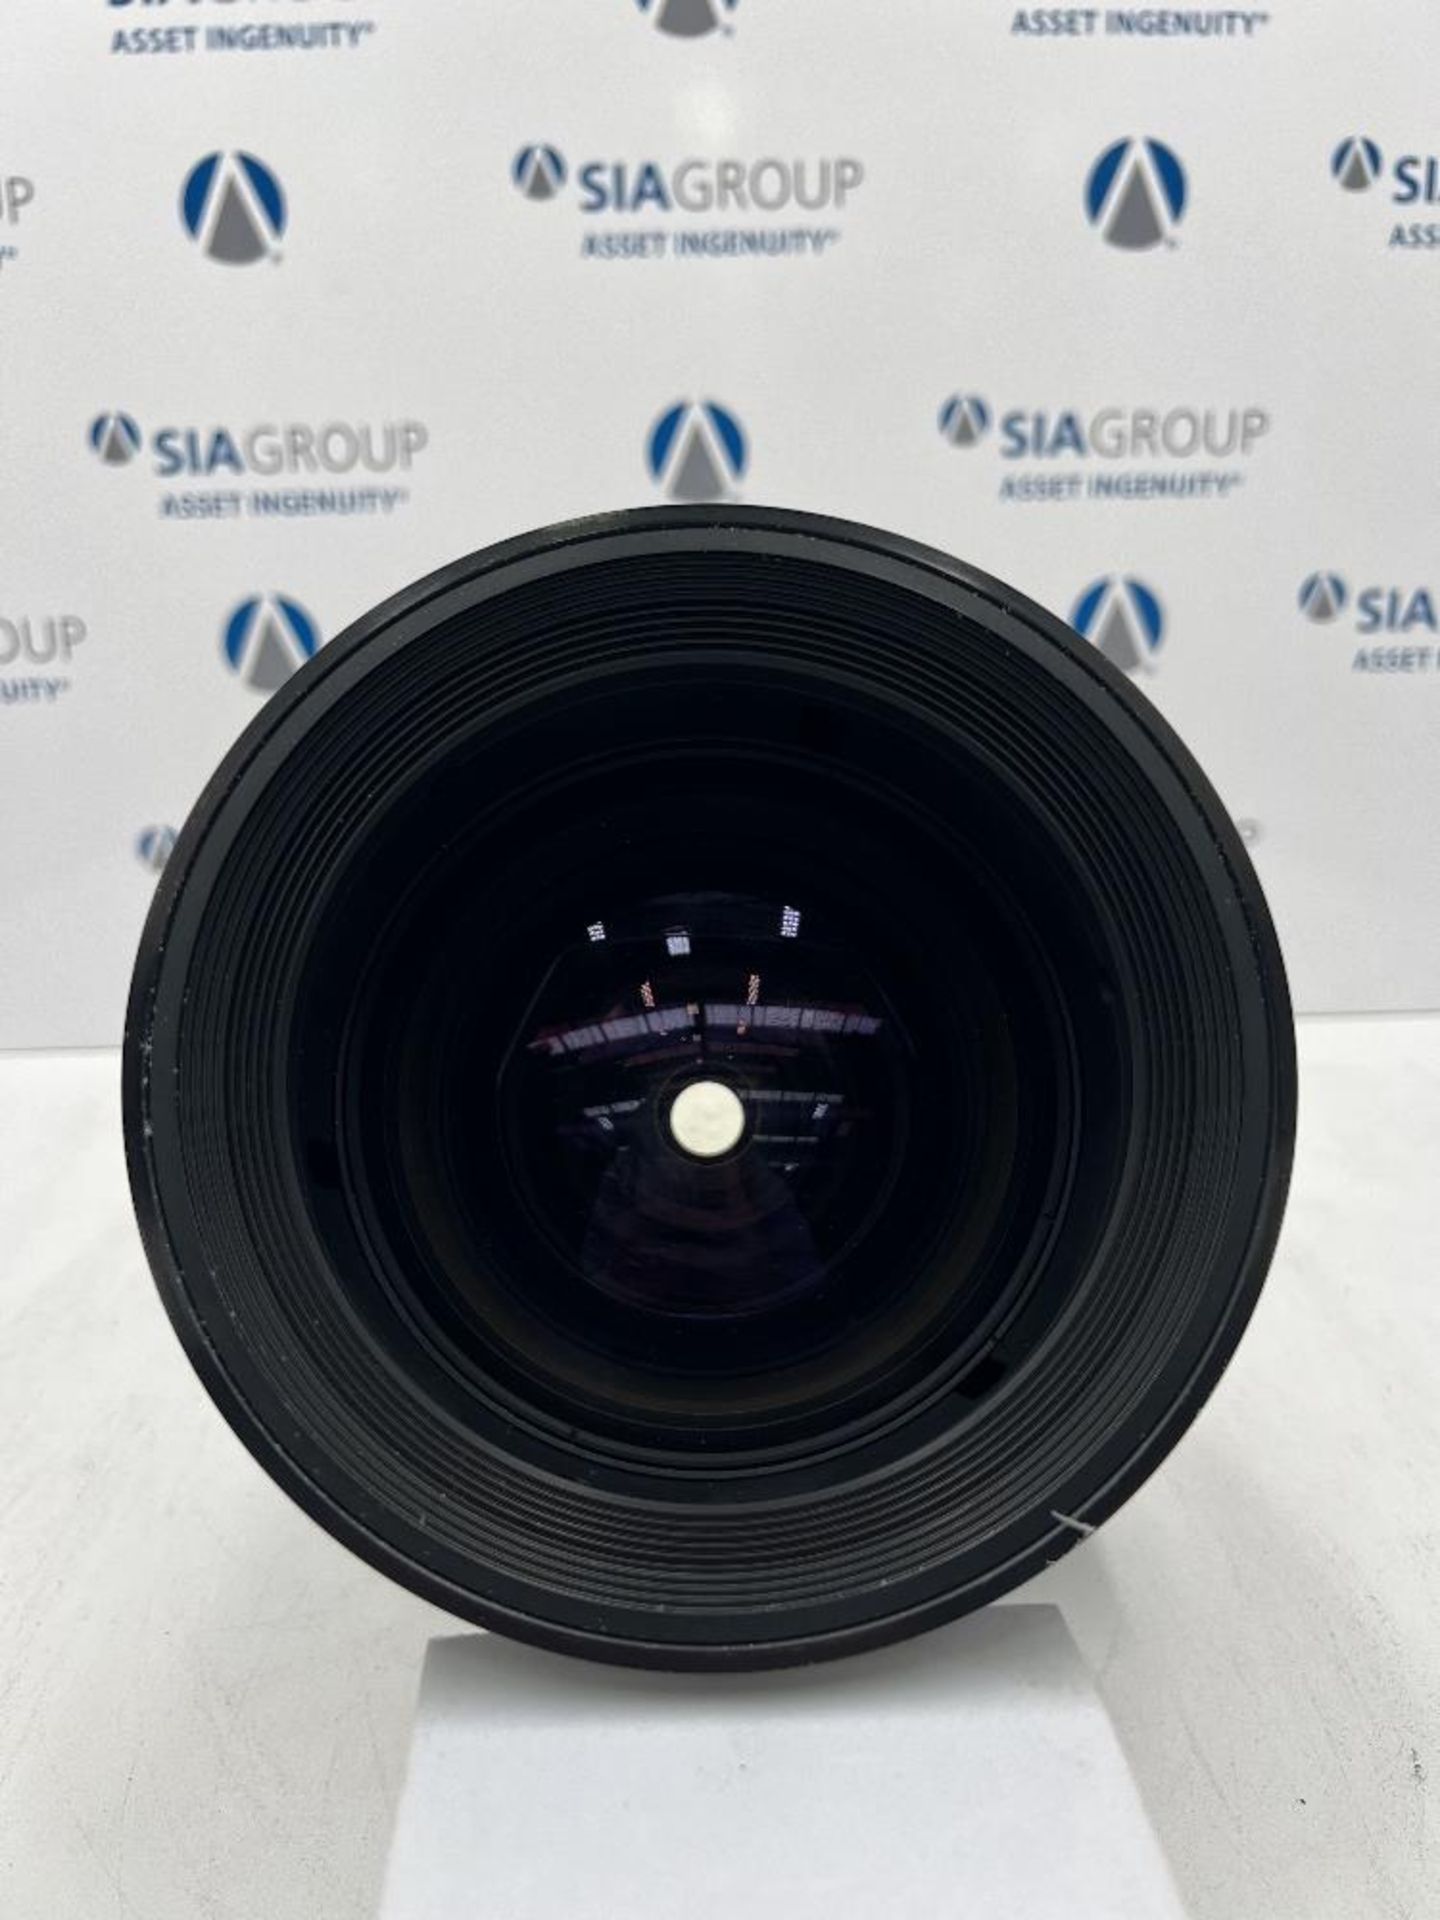 Panasonic ET-D75LE10 1.3-1.7 Zoom Lens With Carrier Case - Image 6 of 9